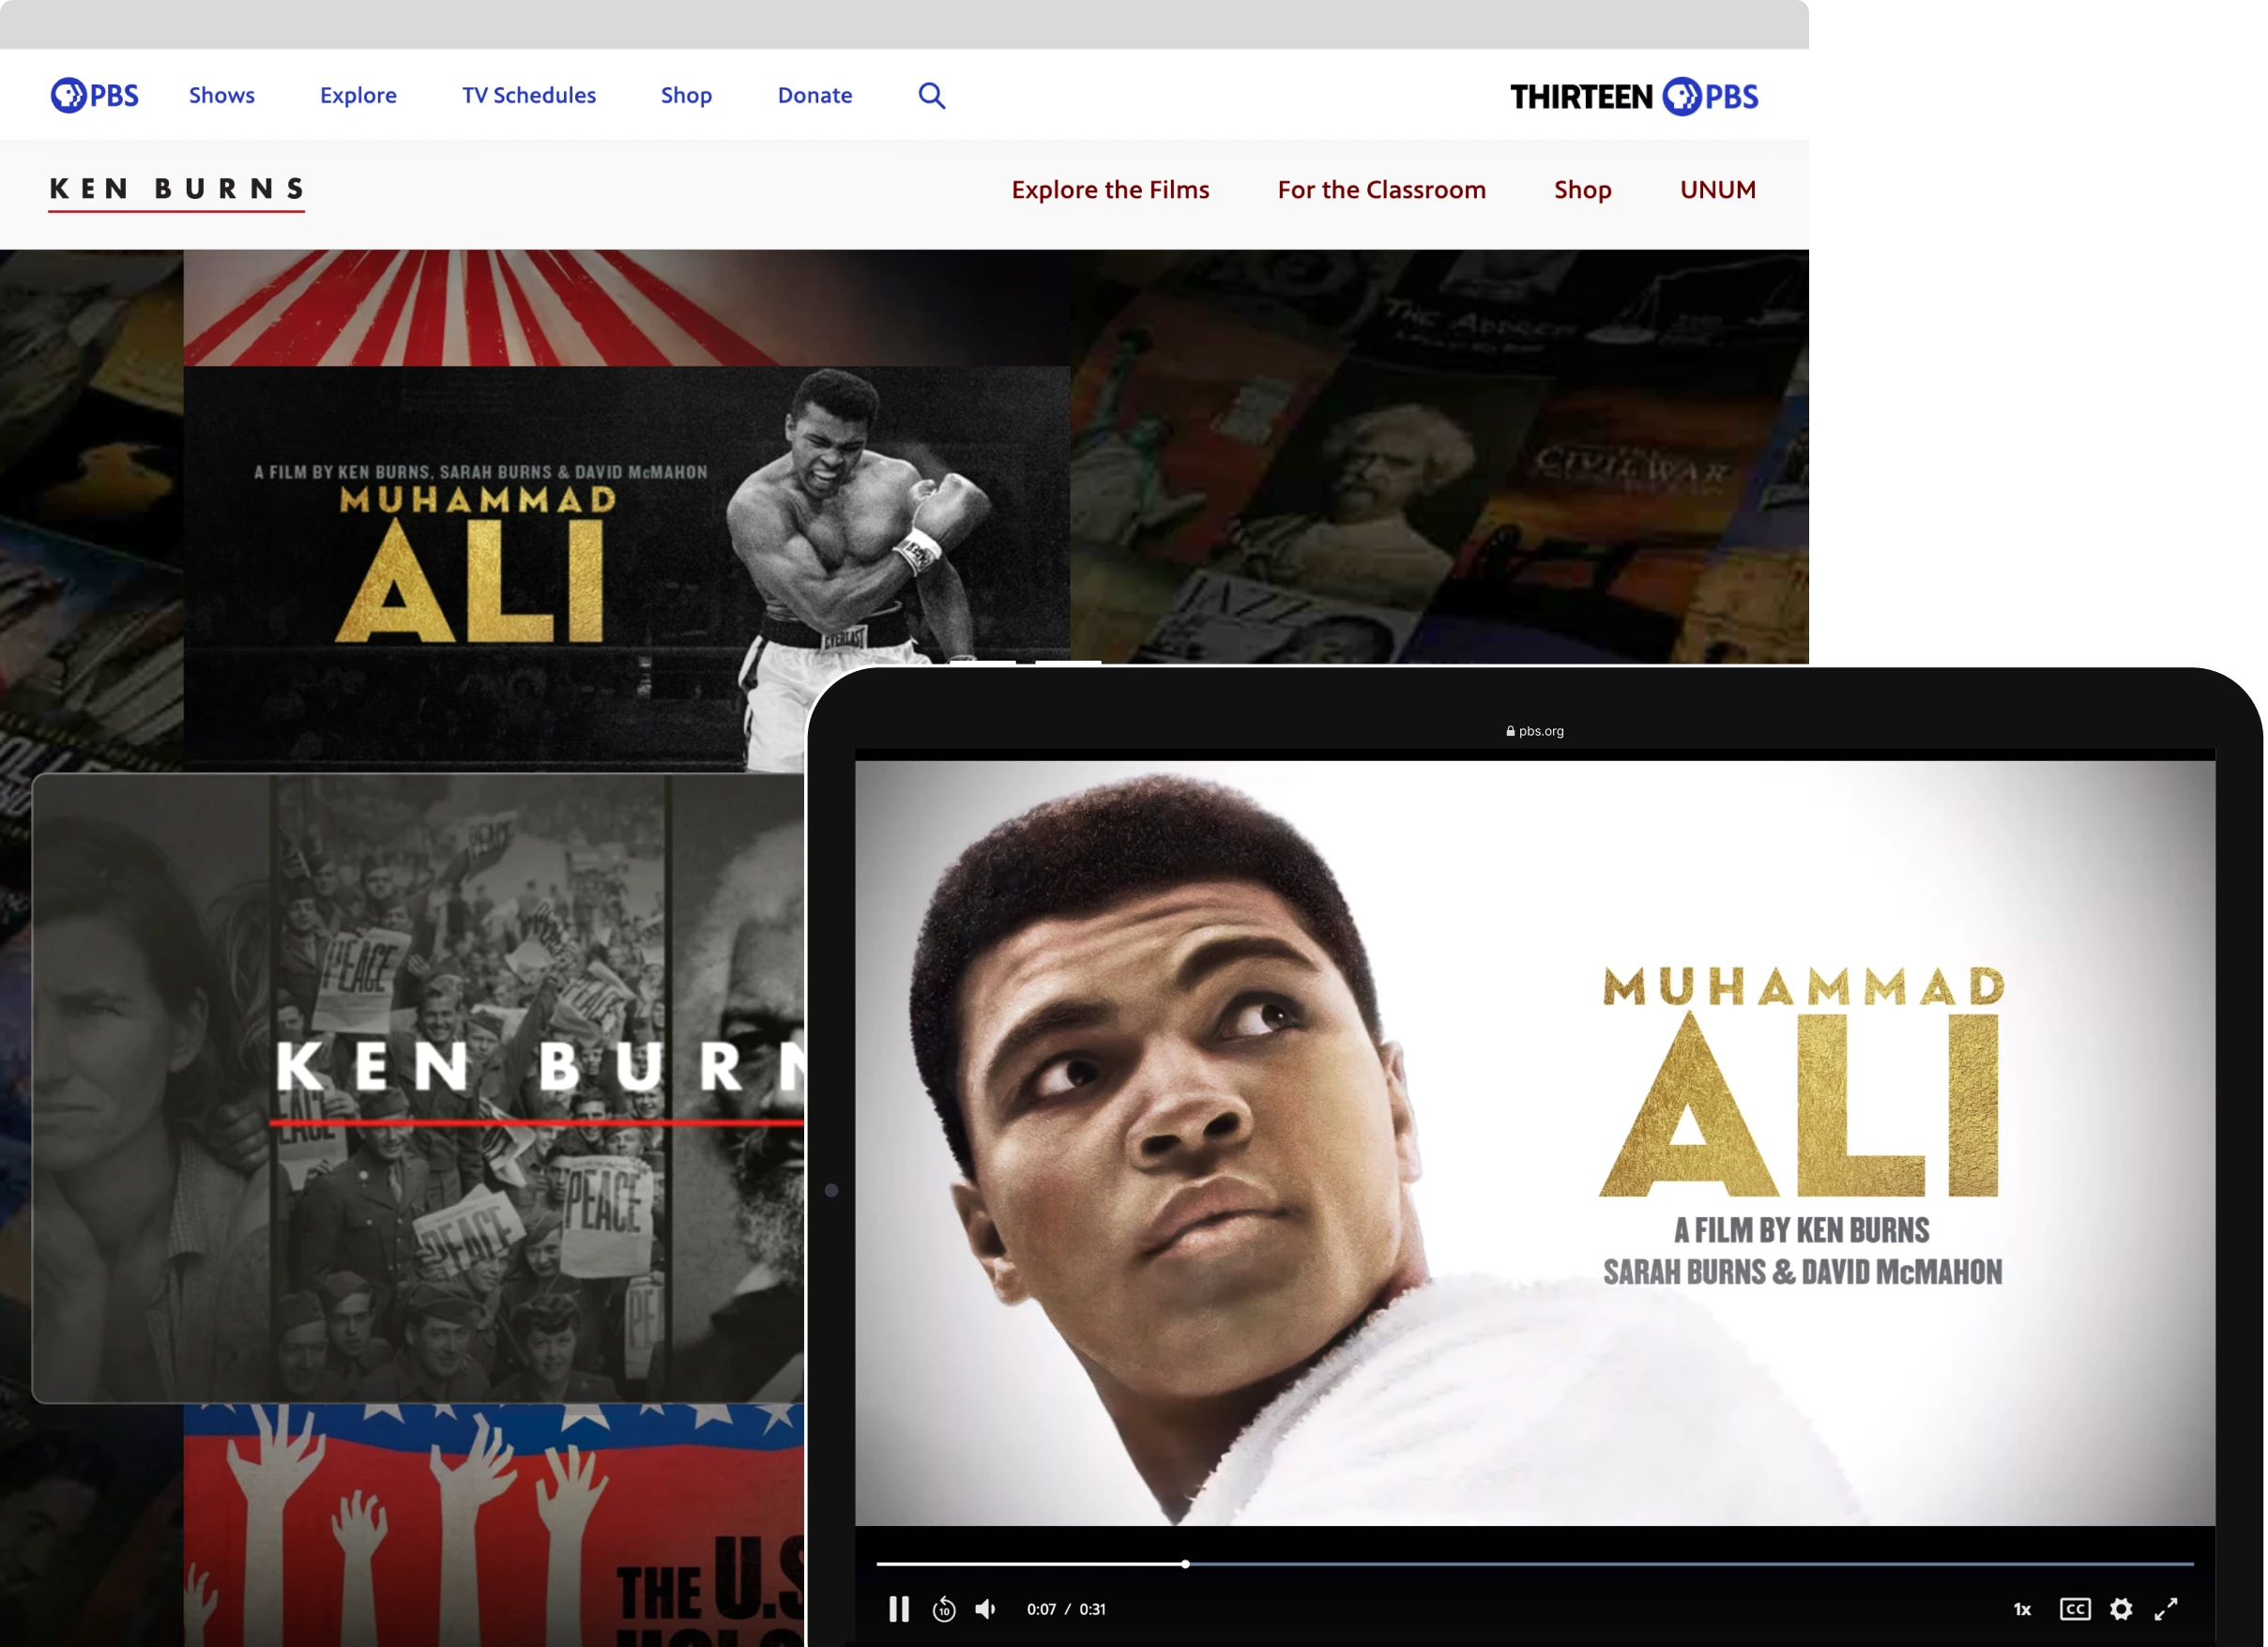 Screenshots of the PBS Ken Burns website developed by Good Work featuring the Muhammad Ali series